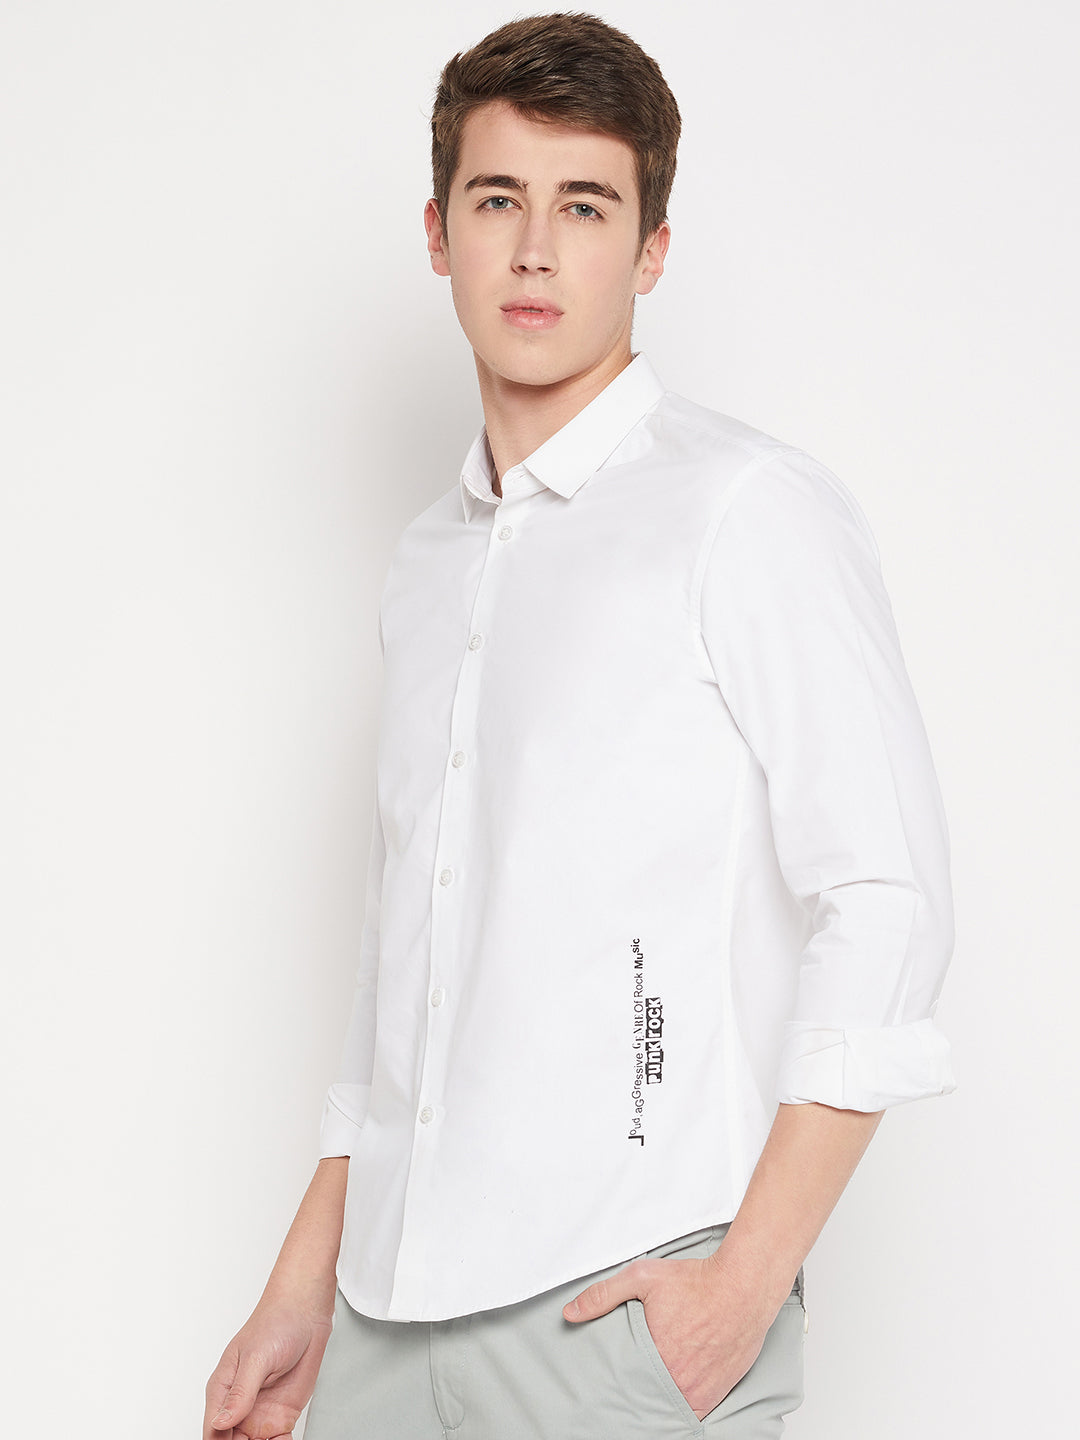 Camla Barcelona White Shirt For Men